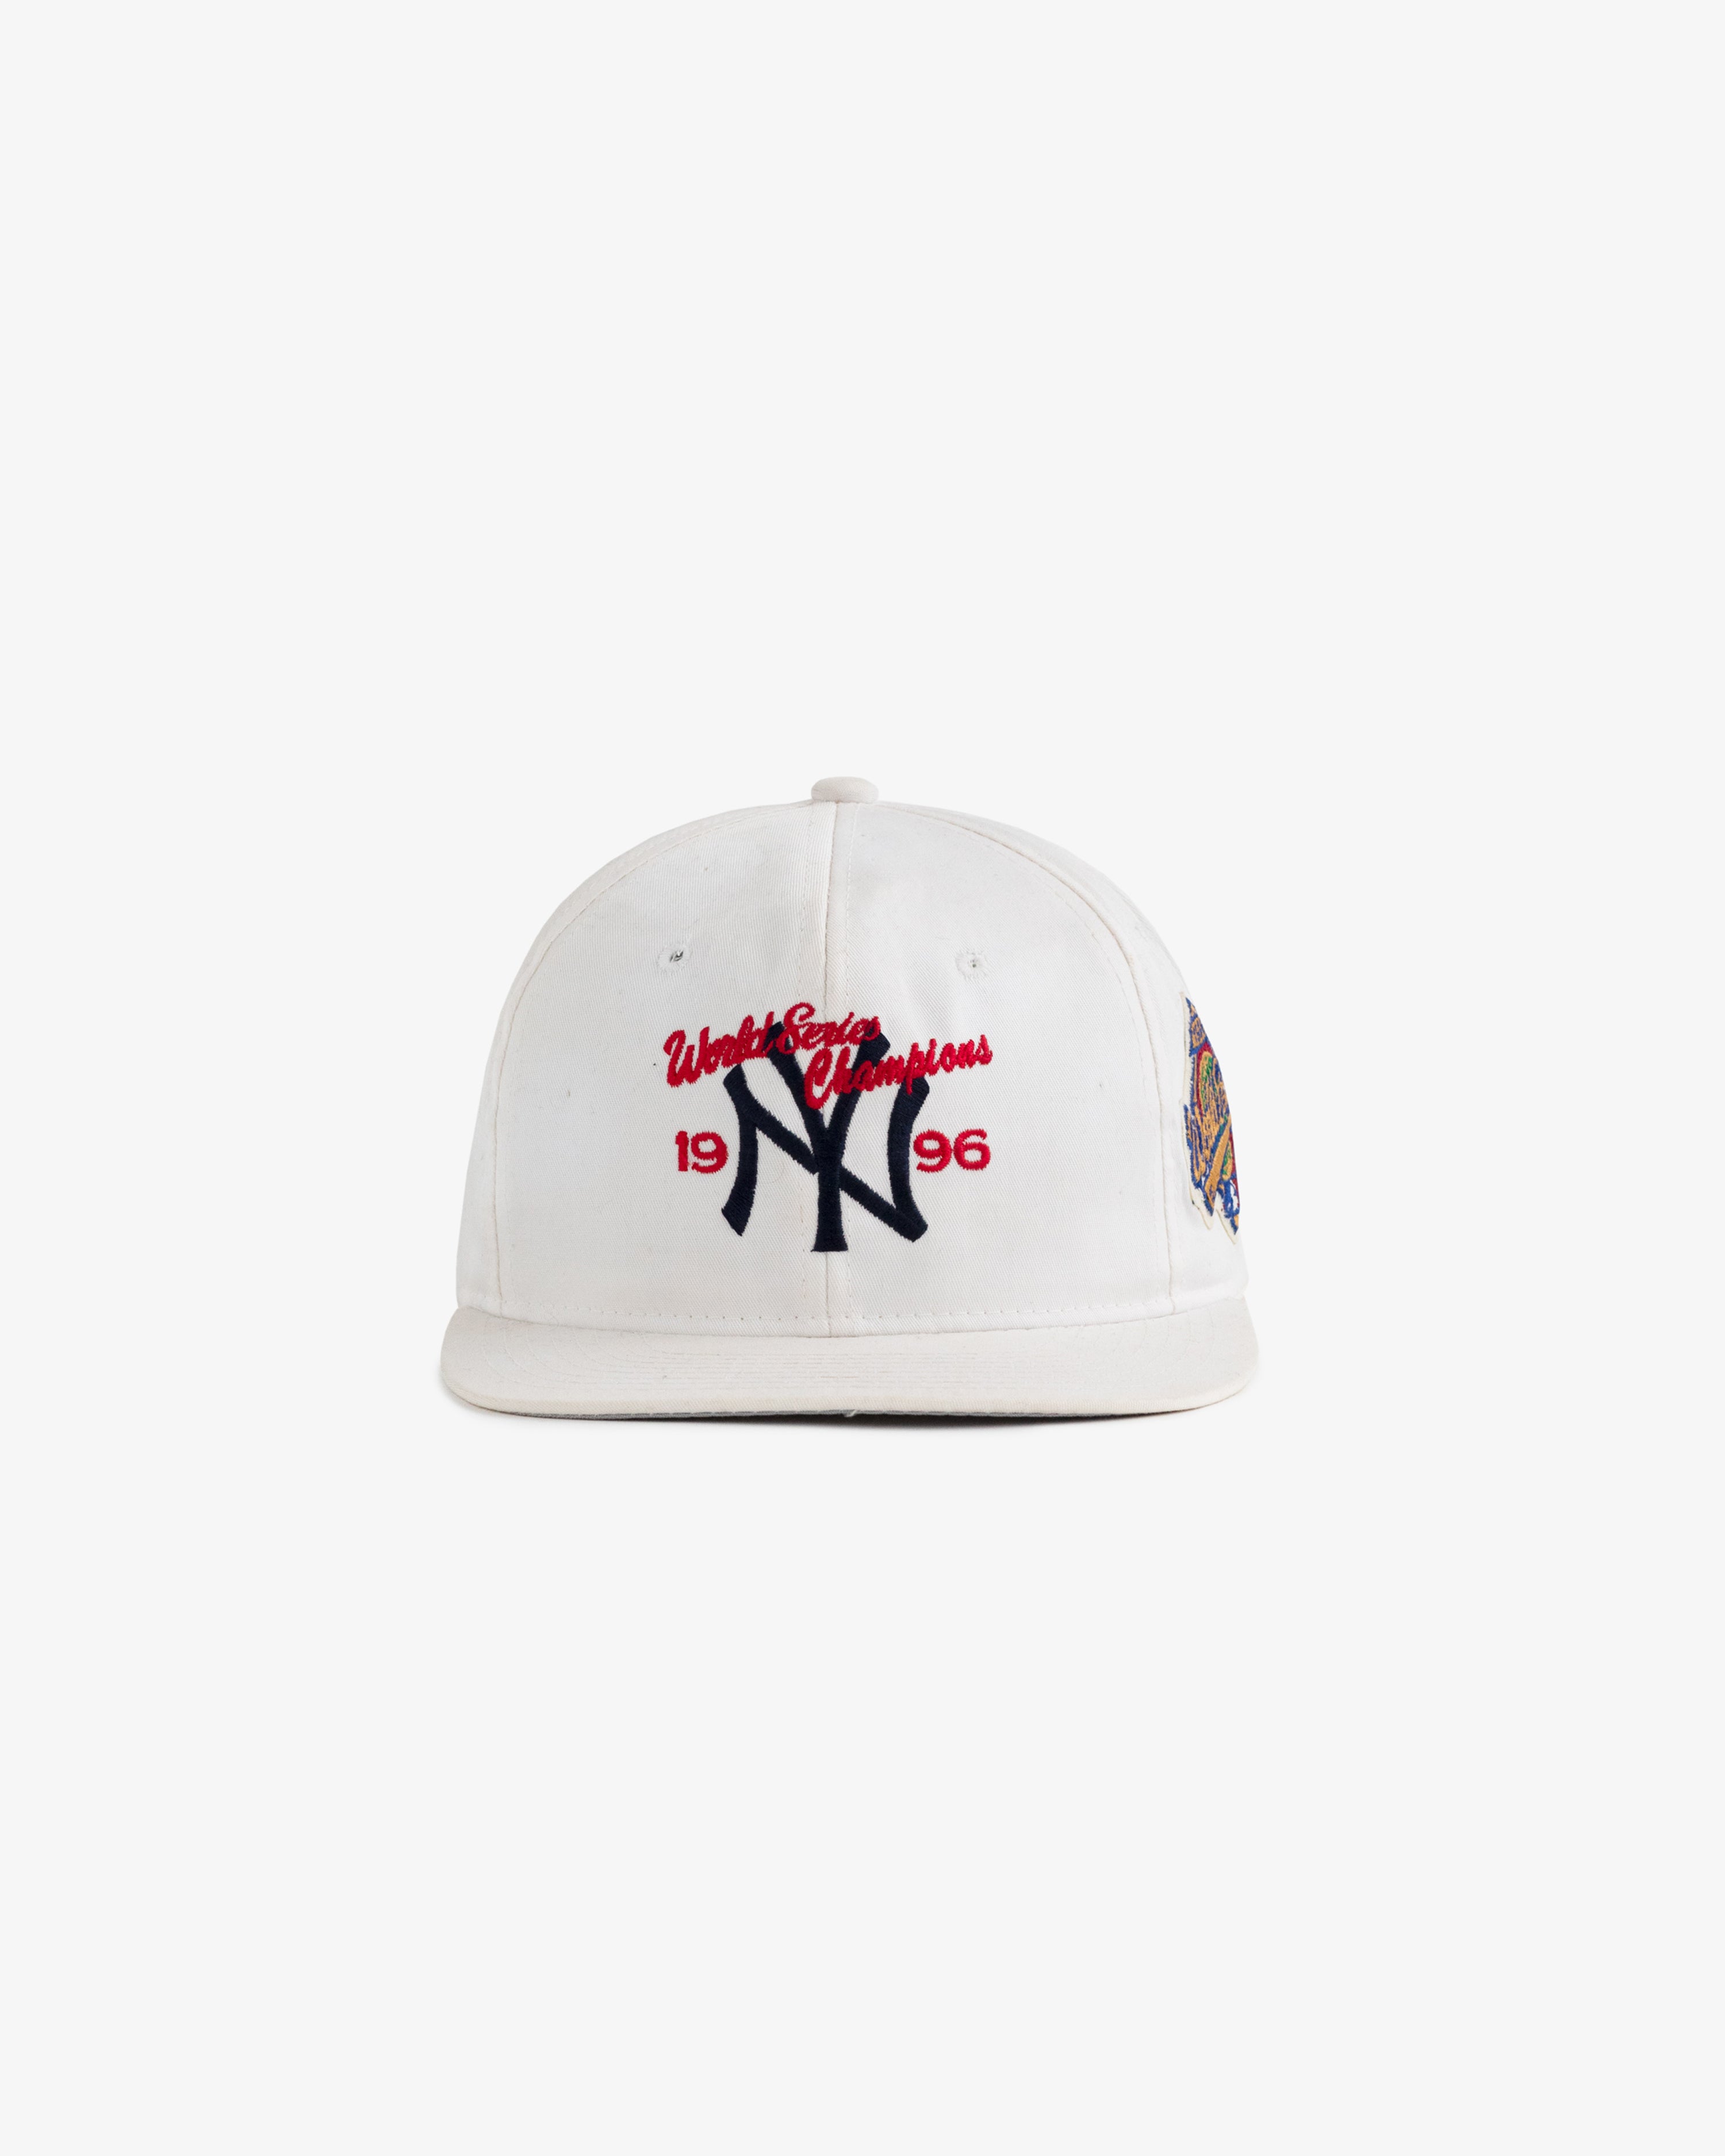 1996 New York Yankees World Series Snapback Hat